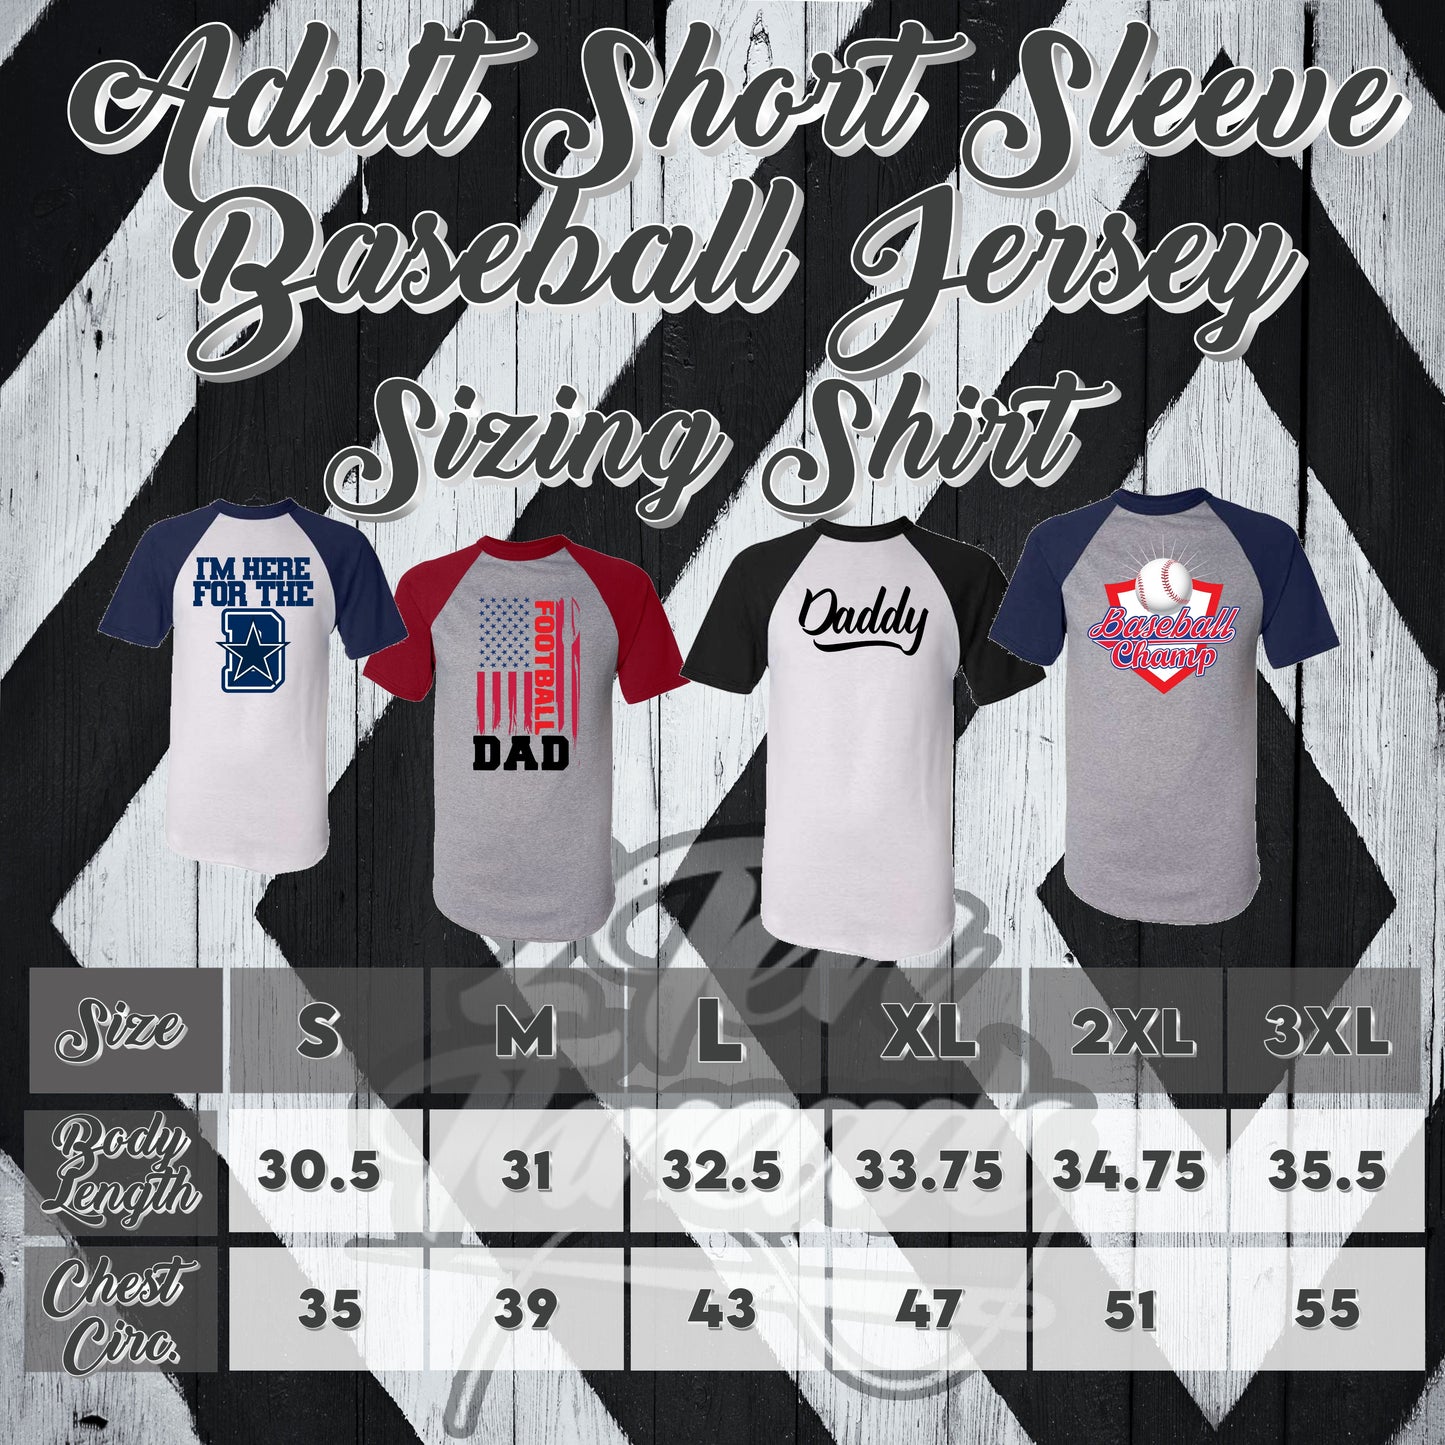 Shake 4DAL Baseball Shirt